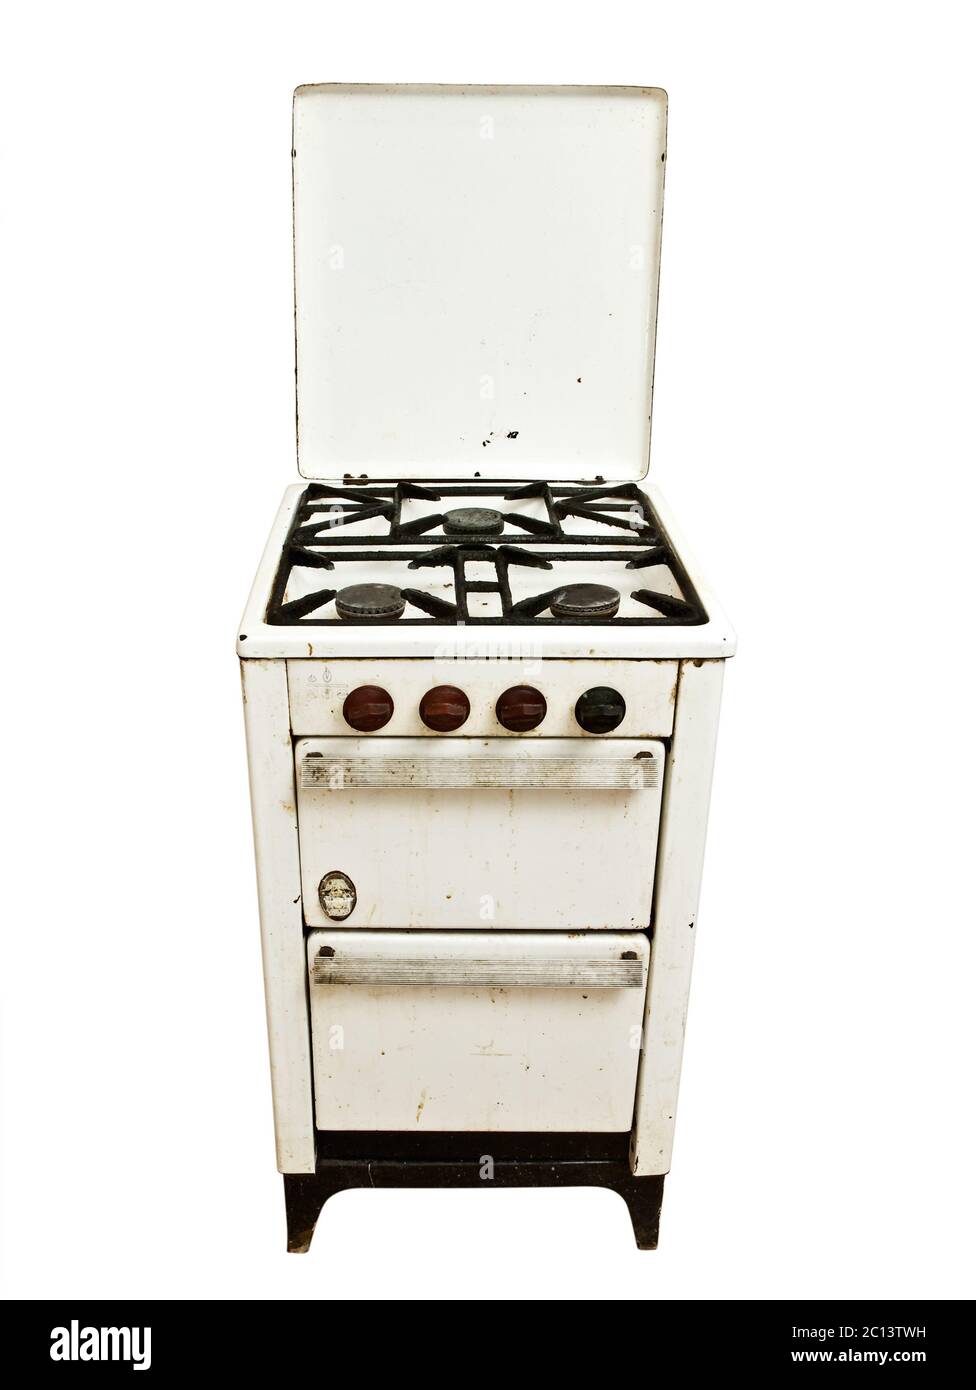 old gas stove Stock Photo - Alamy